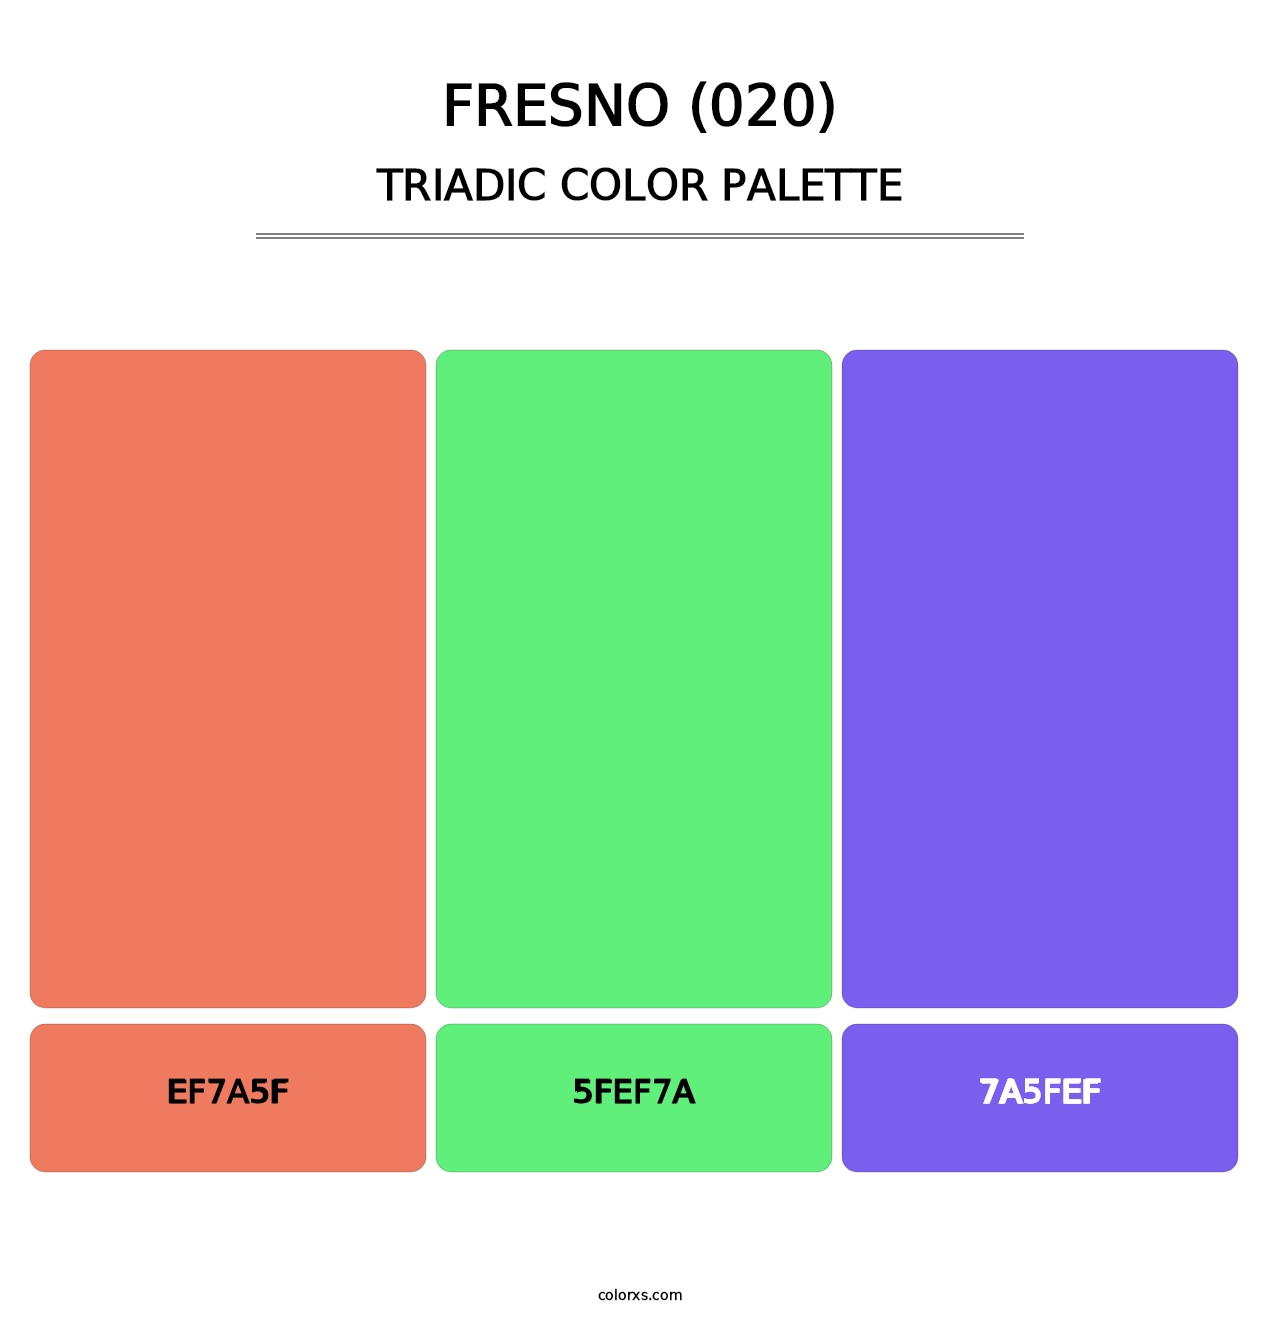 Fresno (020) - Triadic Color Palette